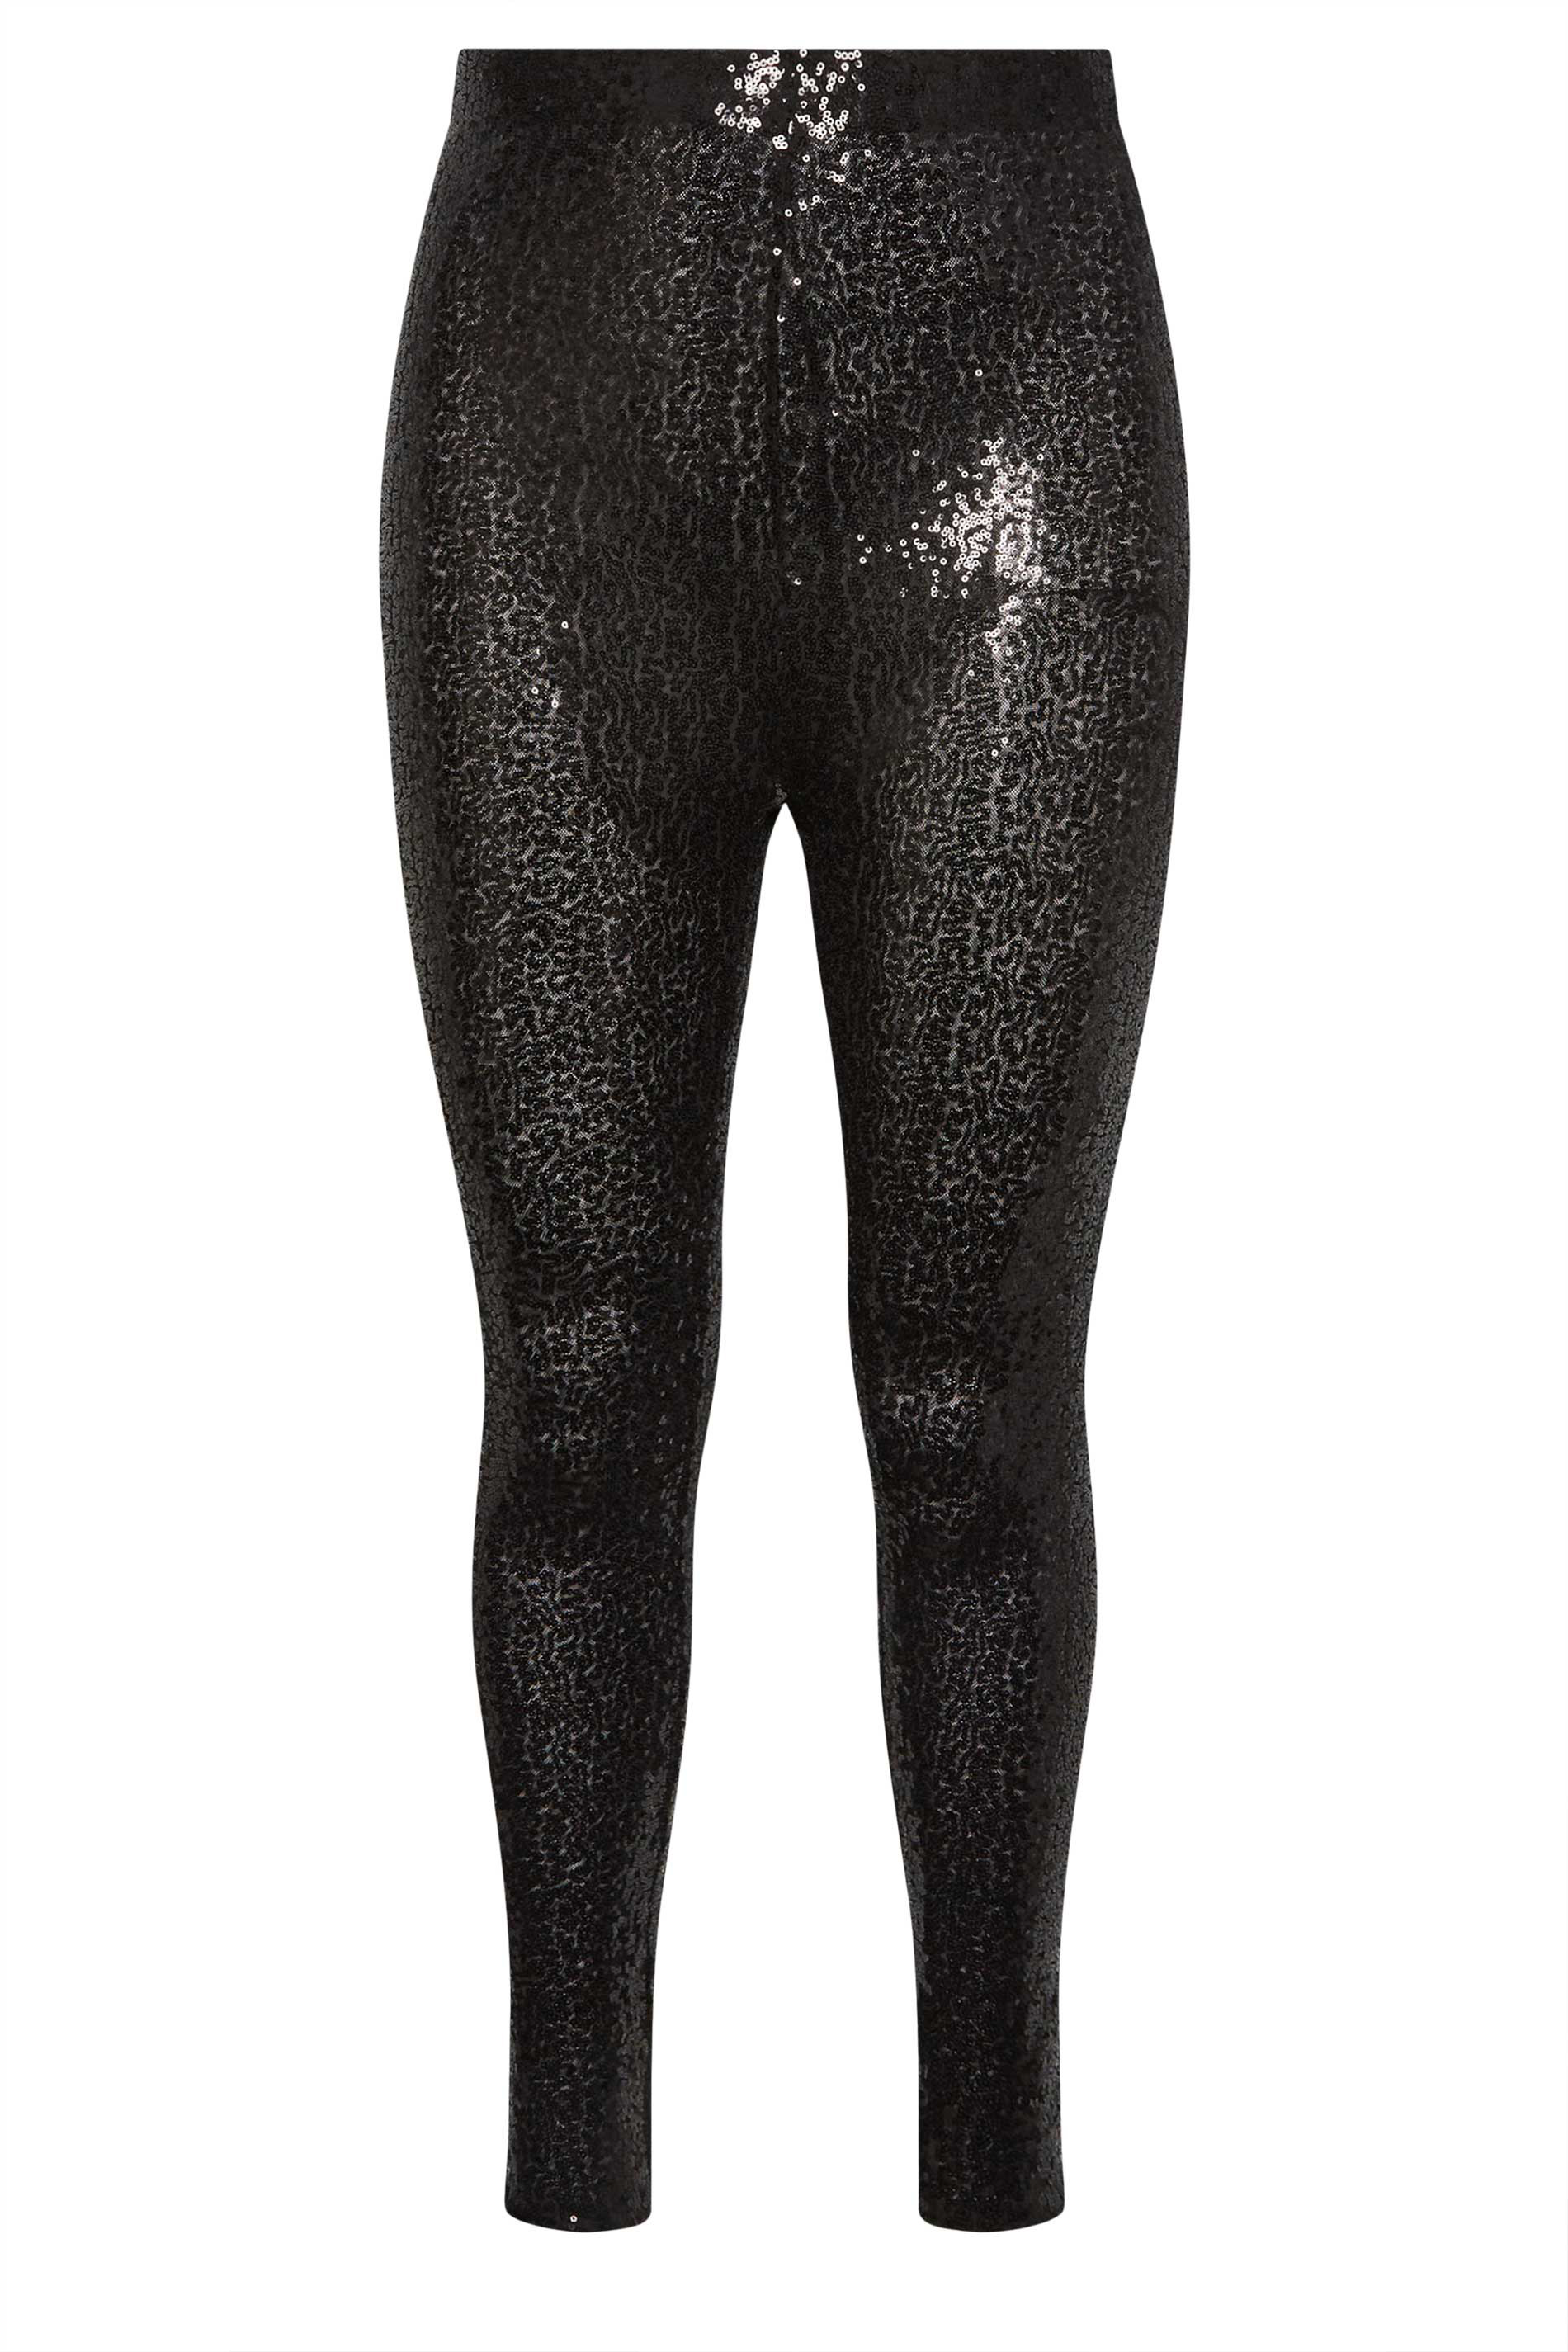 Black and Gold High Waisted Sequin Pants | Fringe+Co – fringe co